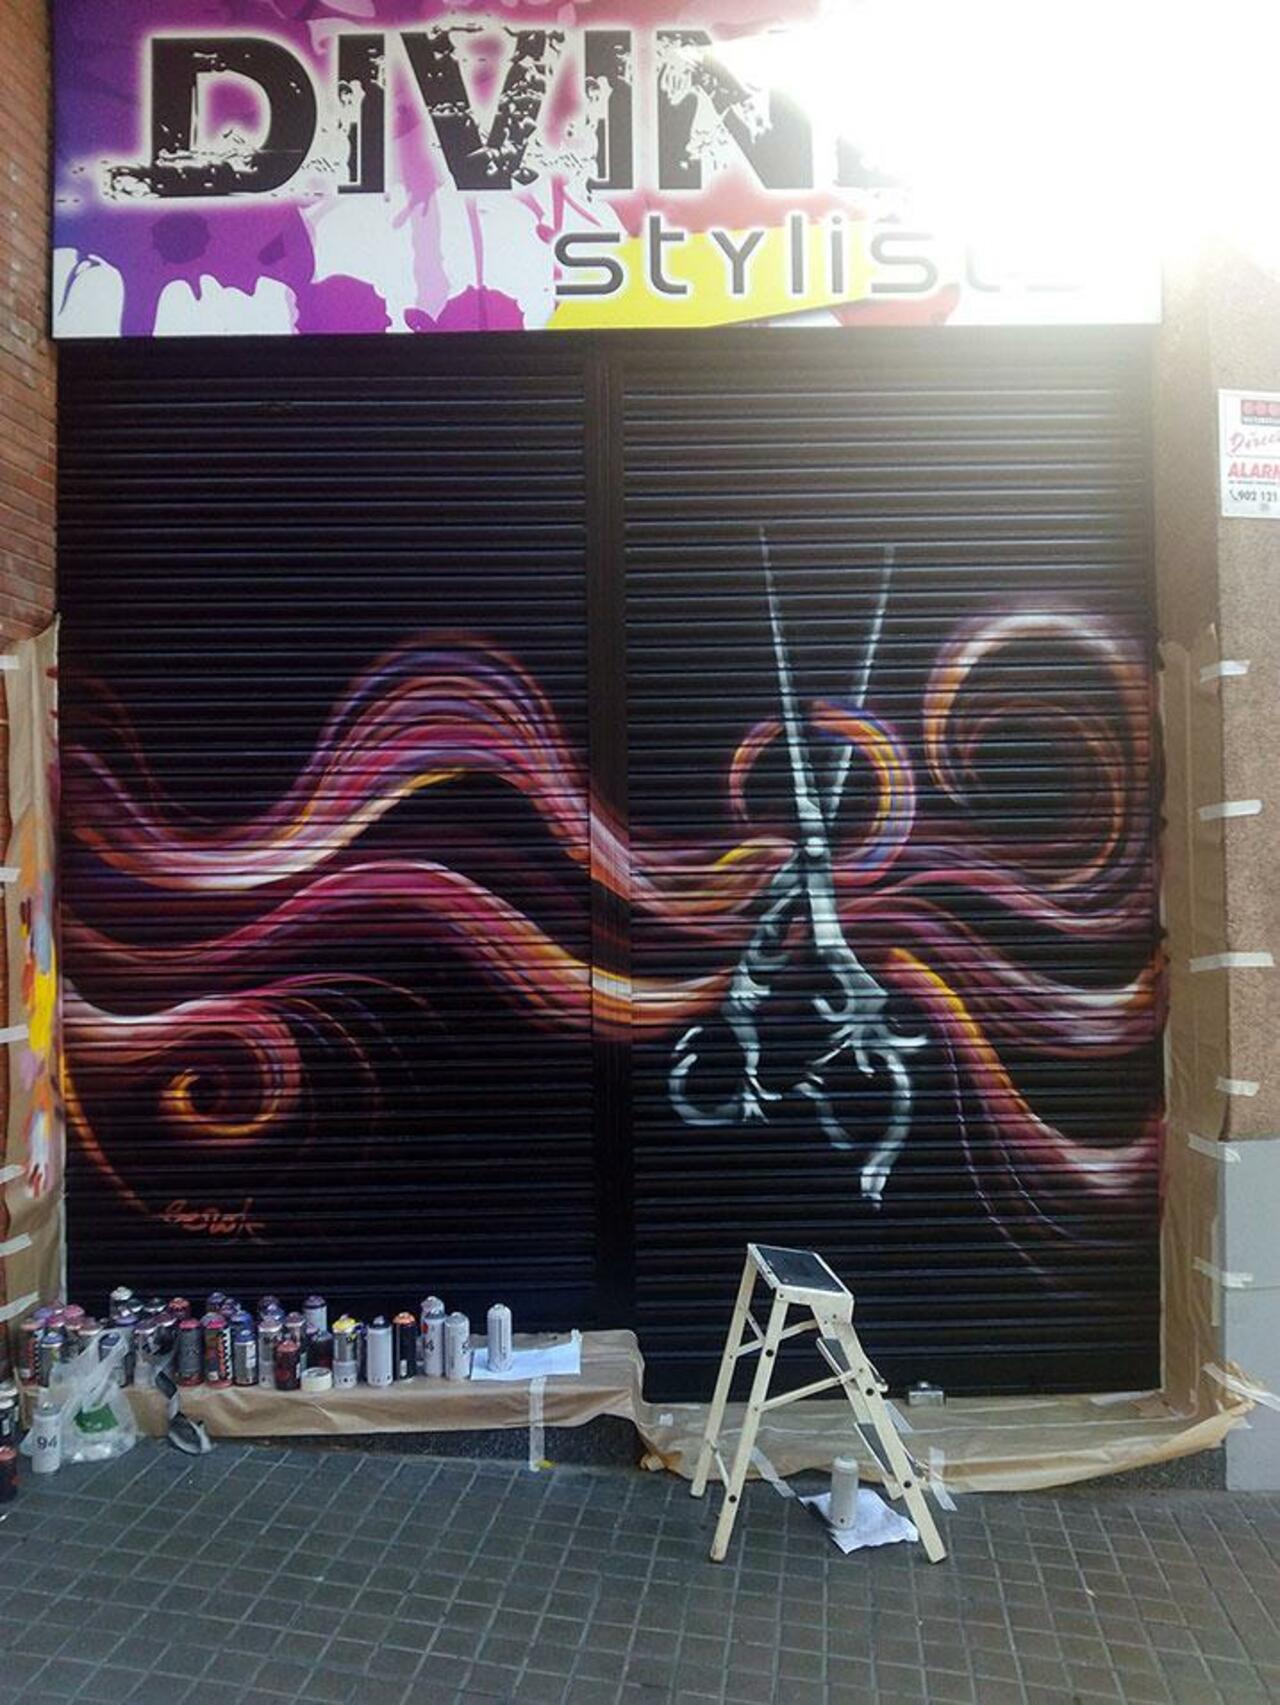 Decoración #graffiti mural en persiana de peluquería Divine Stylists.
#arteurbano http://t.co/UPmQGjpCAP